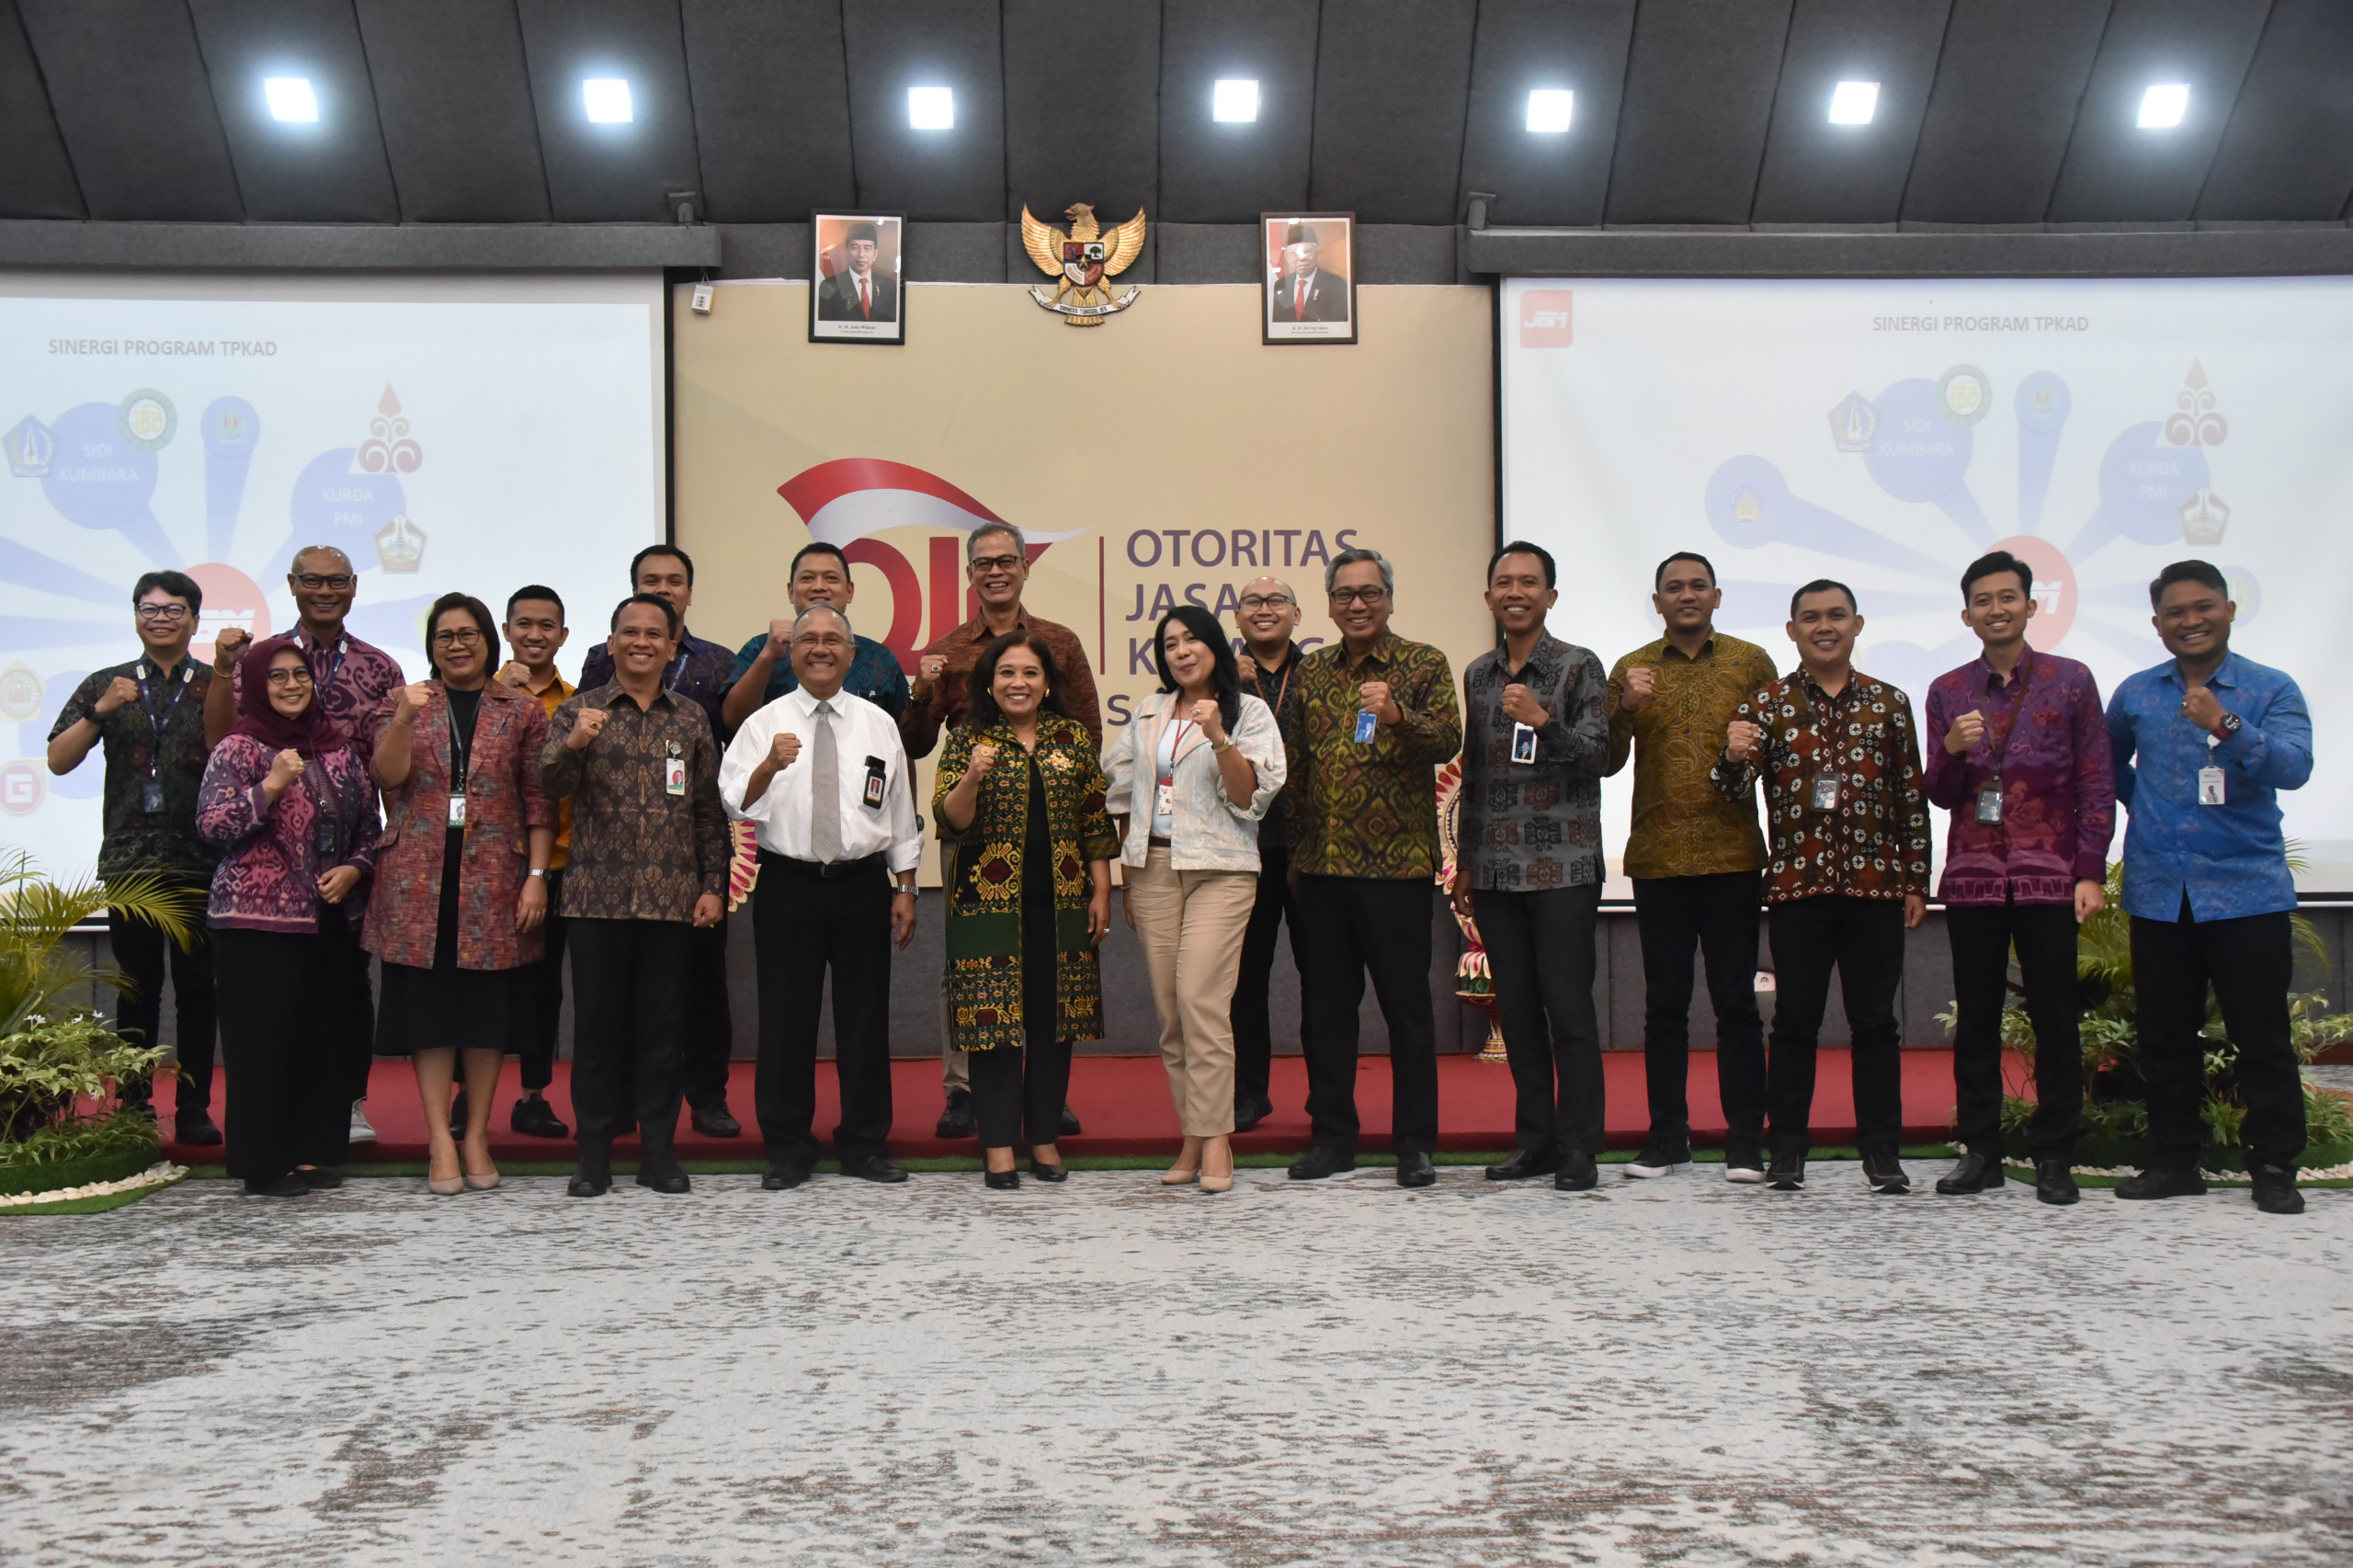 Otoritas Jasa Keuangan (OJK) Provinsi Bali melaksanakan High Level Meeting dengan pimpinan pelaku usaha jasa keuangan (PUJK).